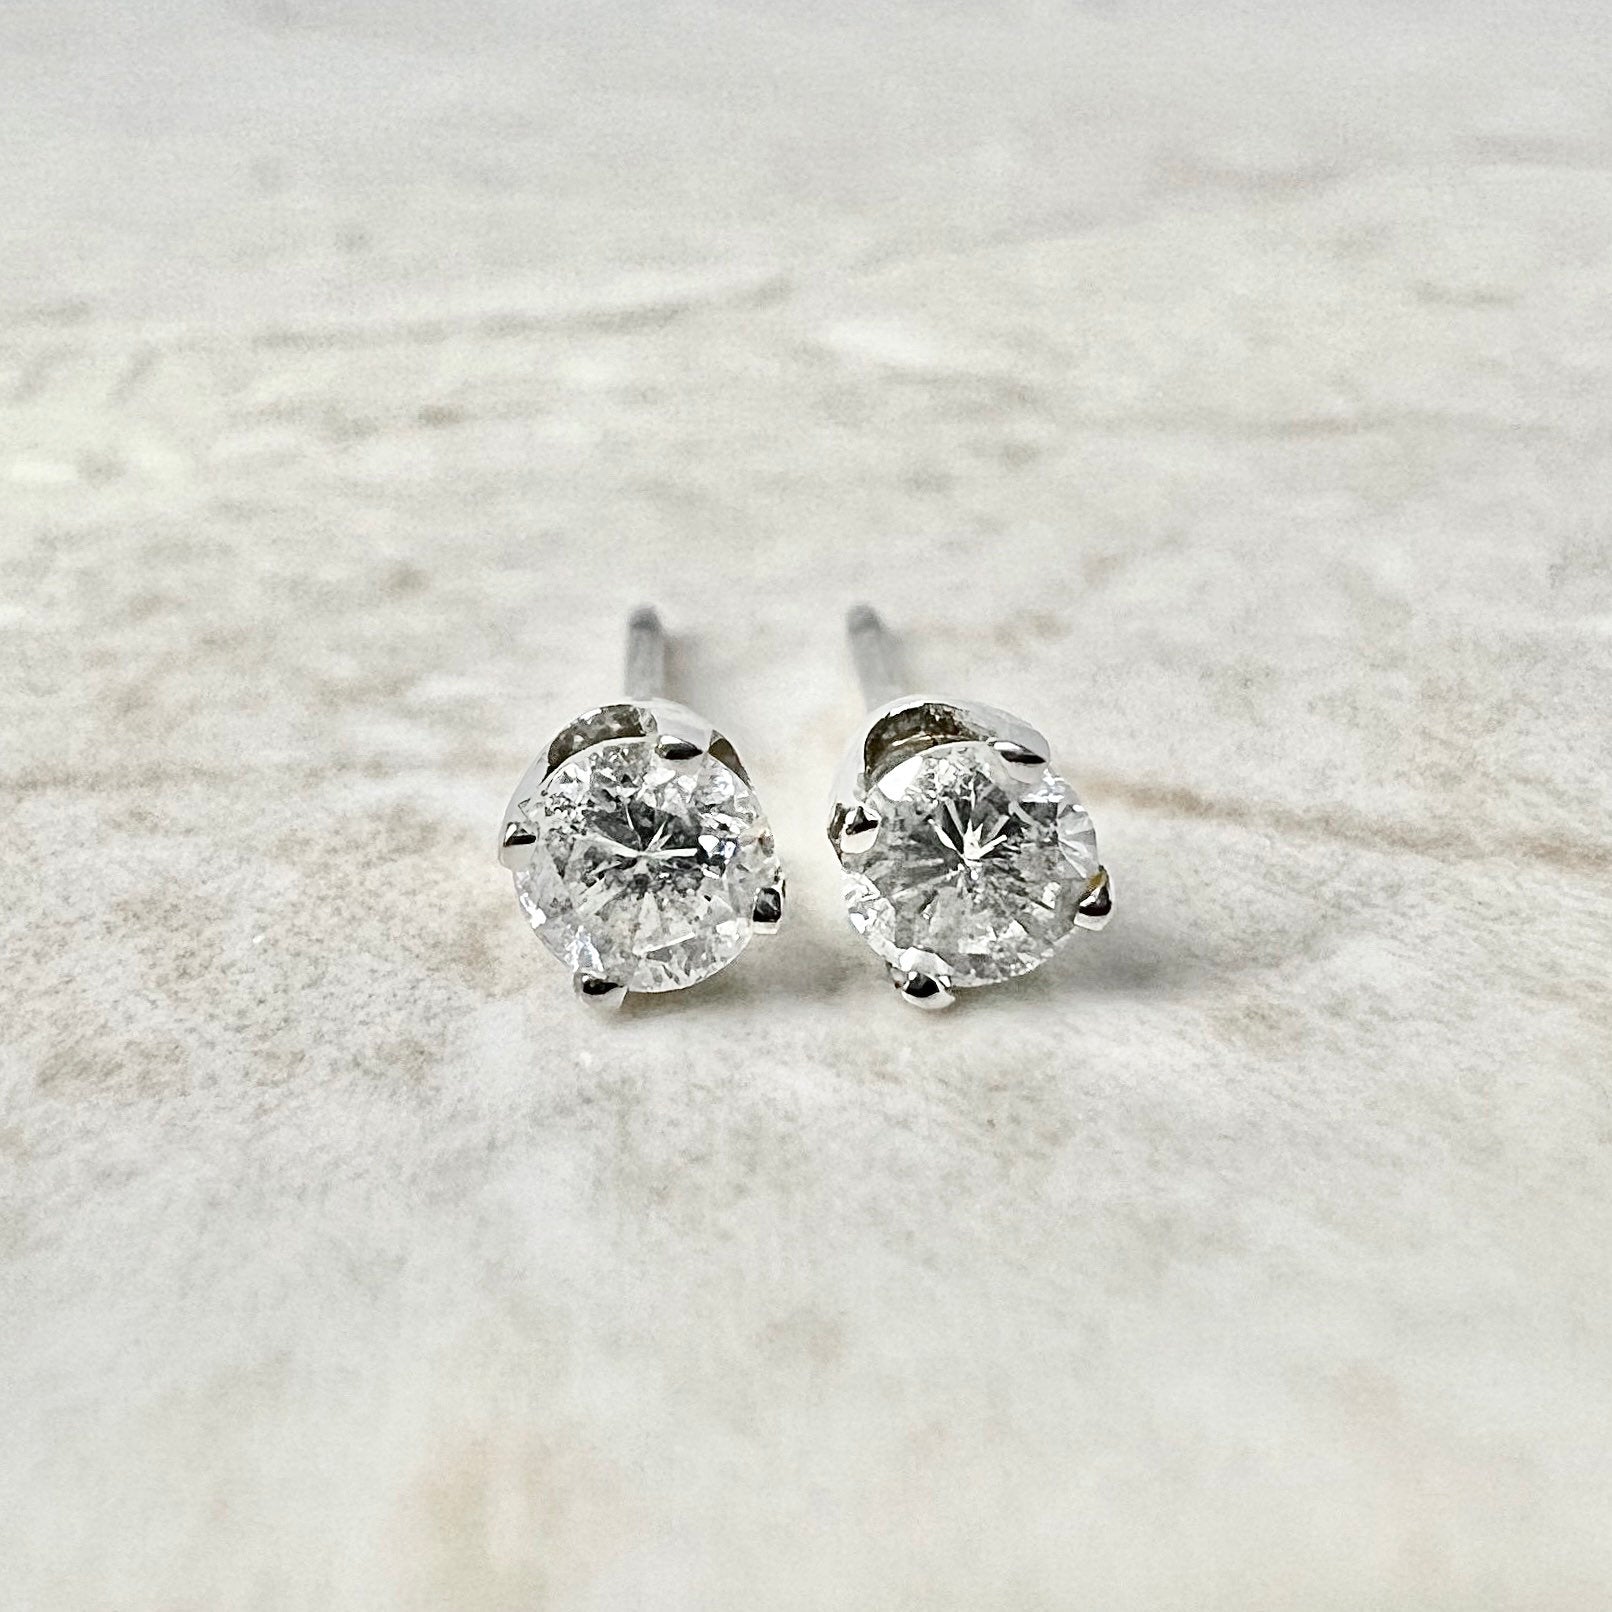 Six Prong Ornate Basket Diamond Stud Earrings – With Clarity